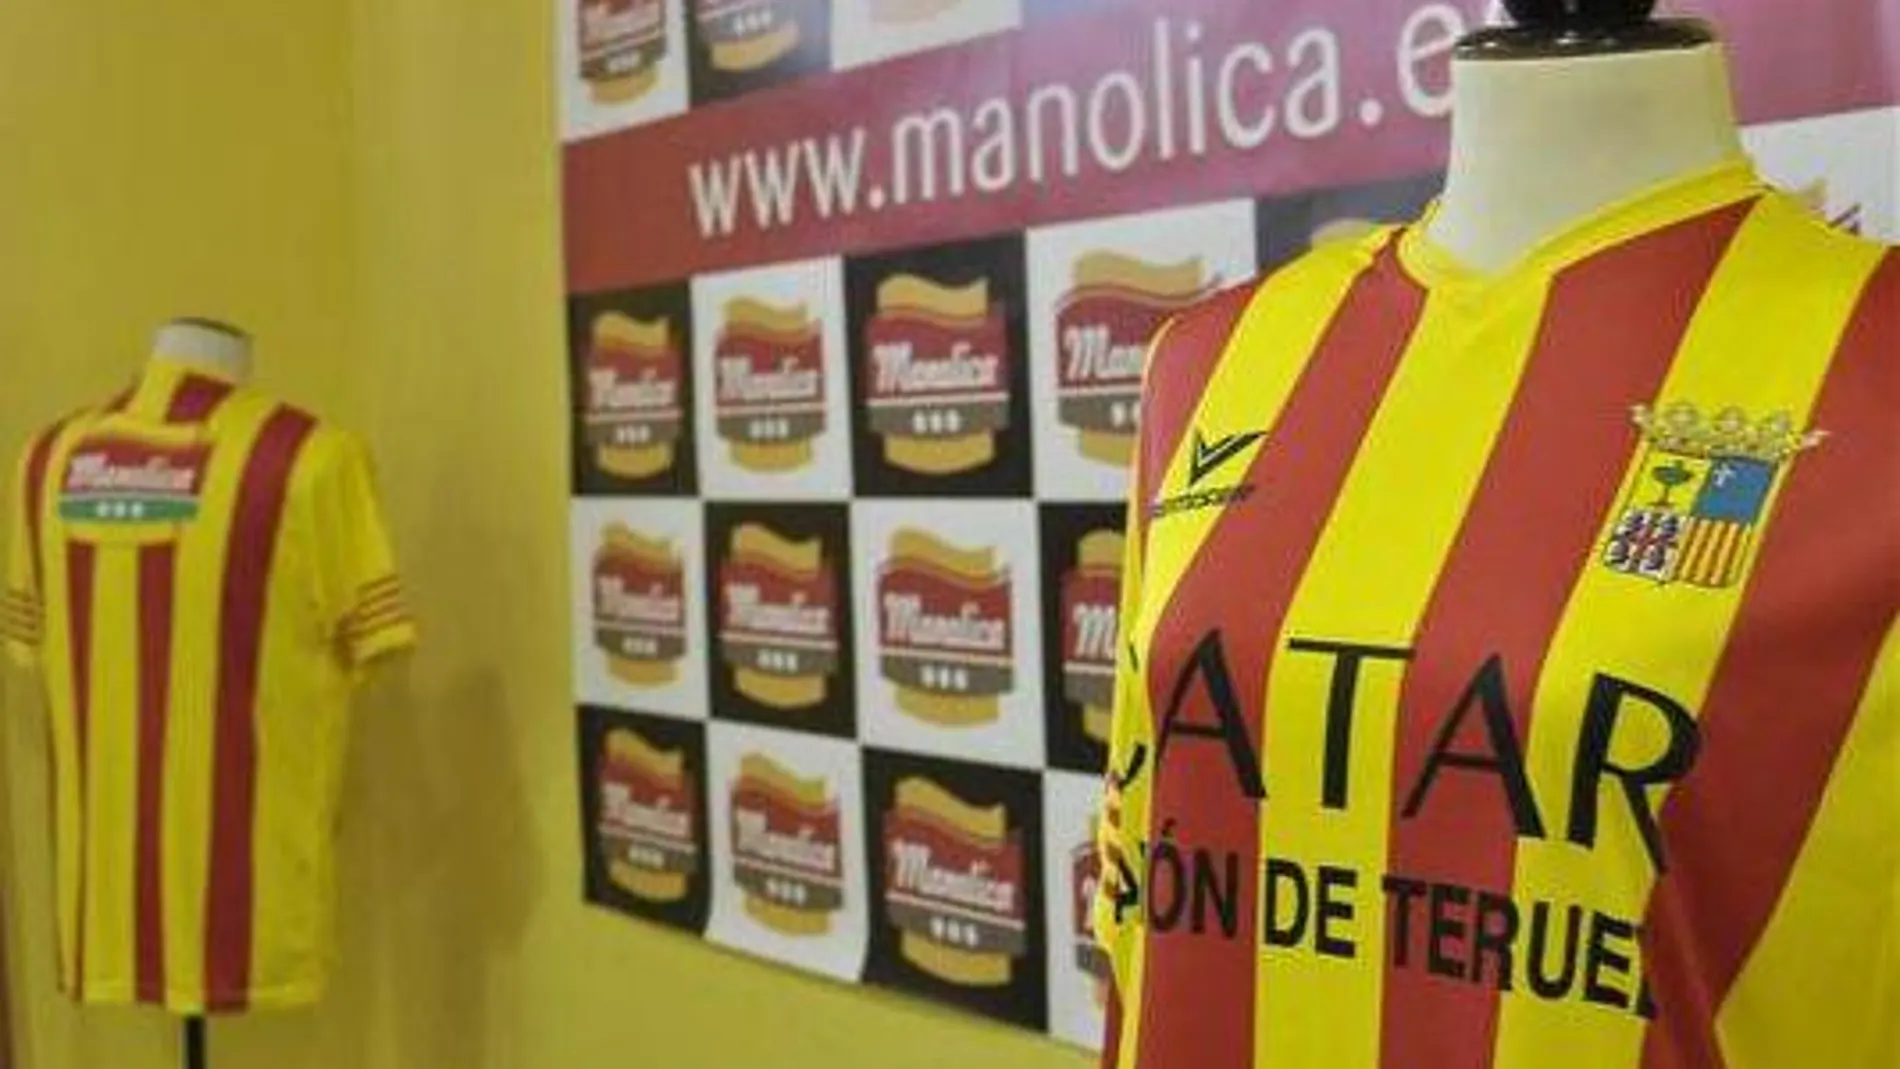 Polémica camiseta con el lema "Catar jamón de Teruel"